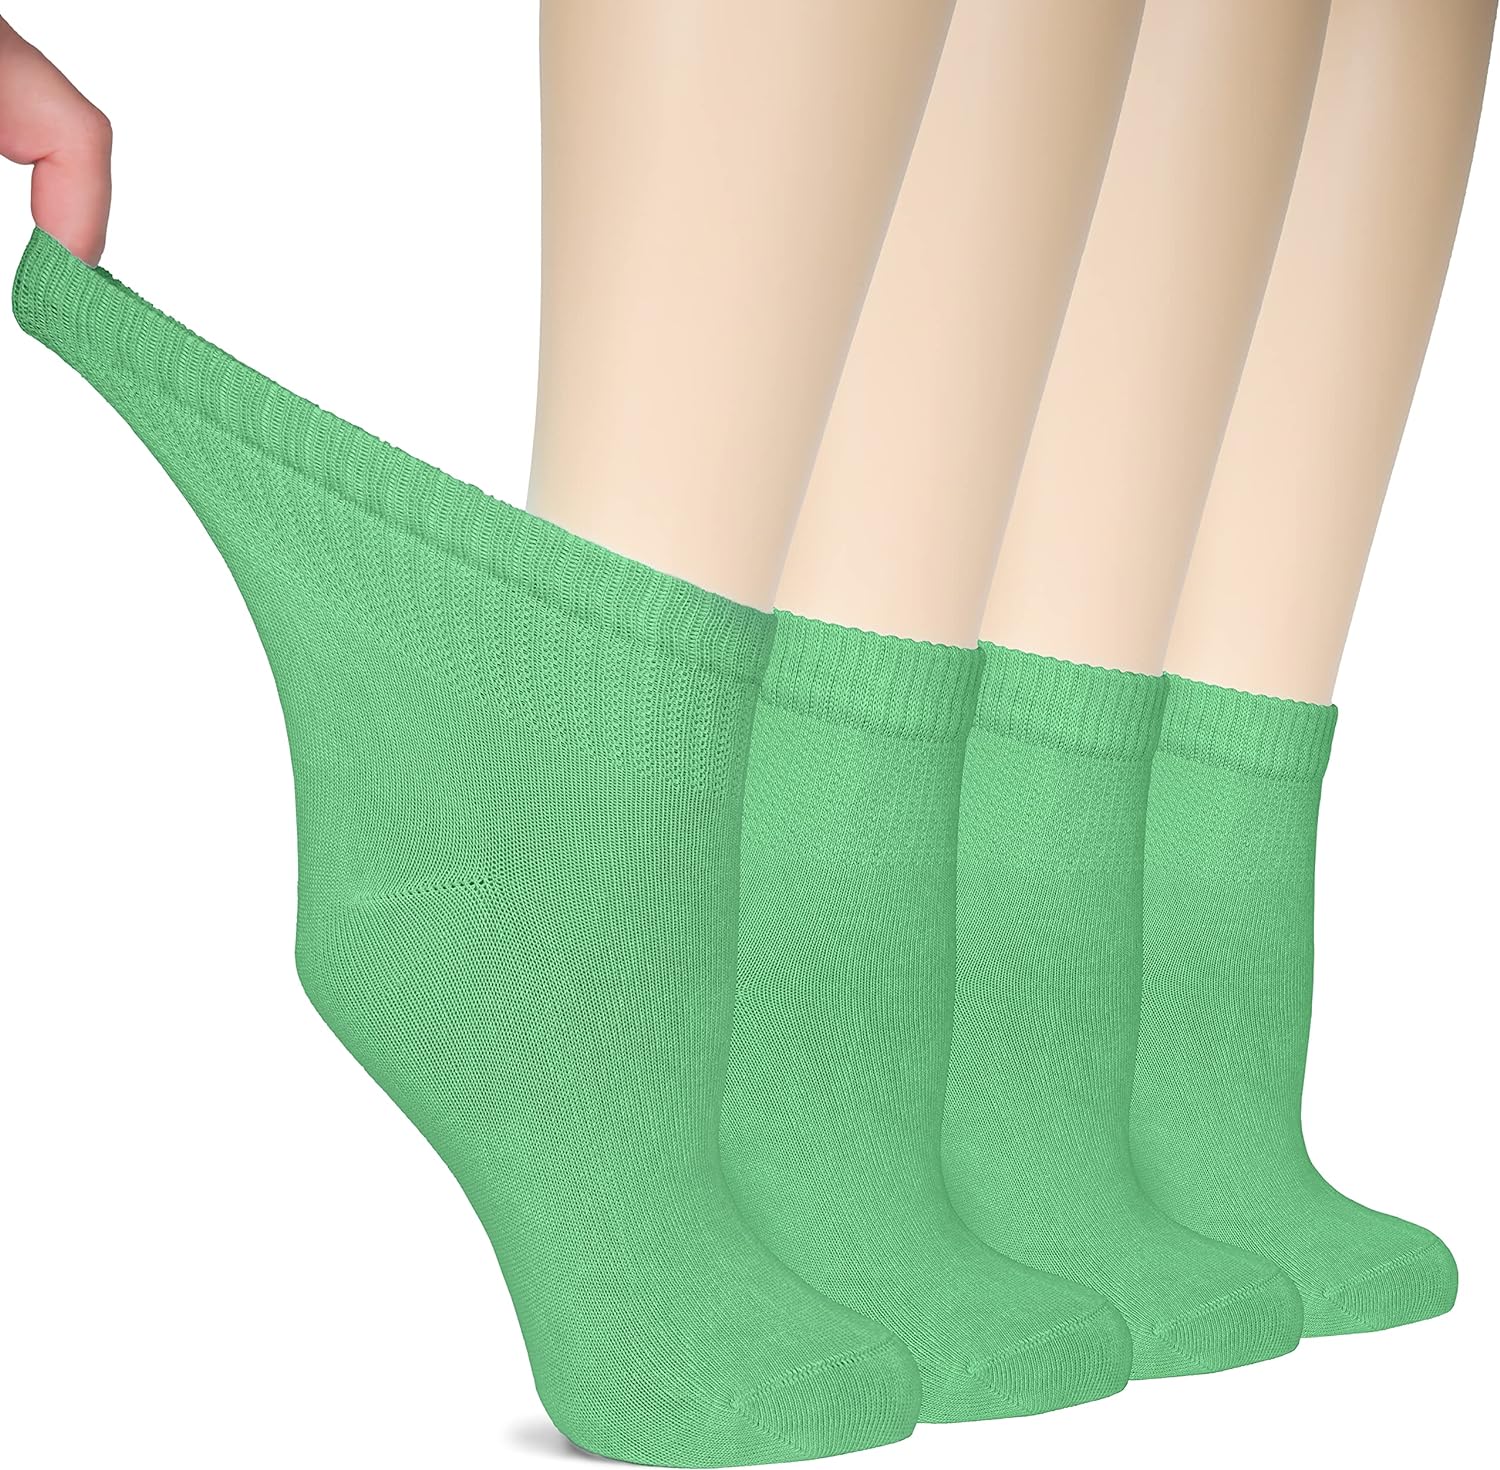 Hugh Ugoli Women Diabetic Ankle Socks, Super Soft Thin Bamboo Socks, Wide Loose, Non-Binding Top Seamless Toe, 4 Pairs